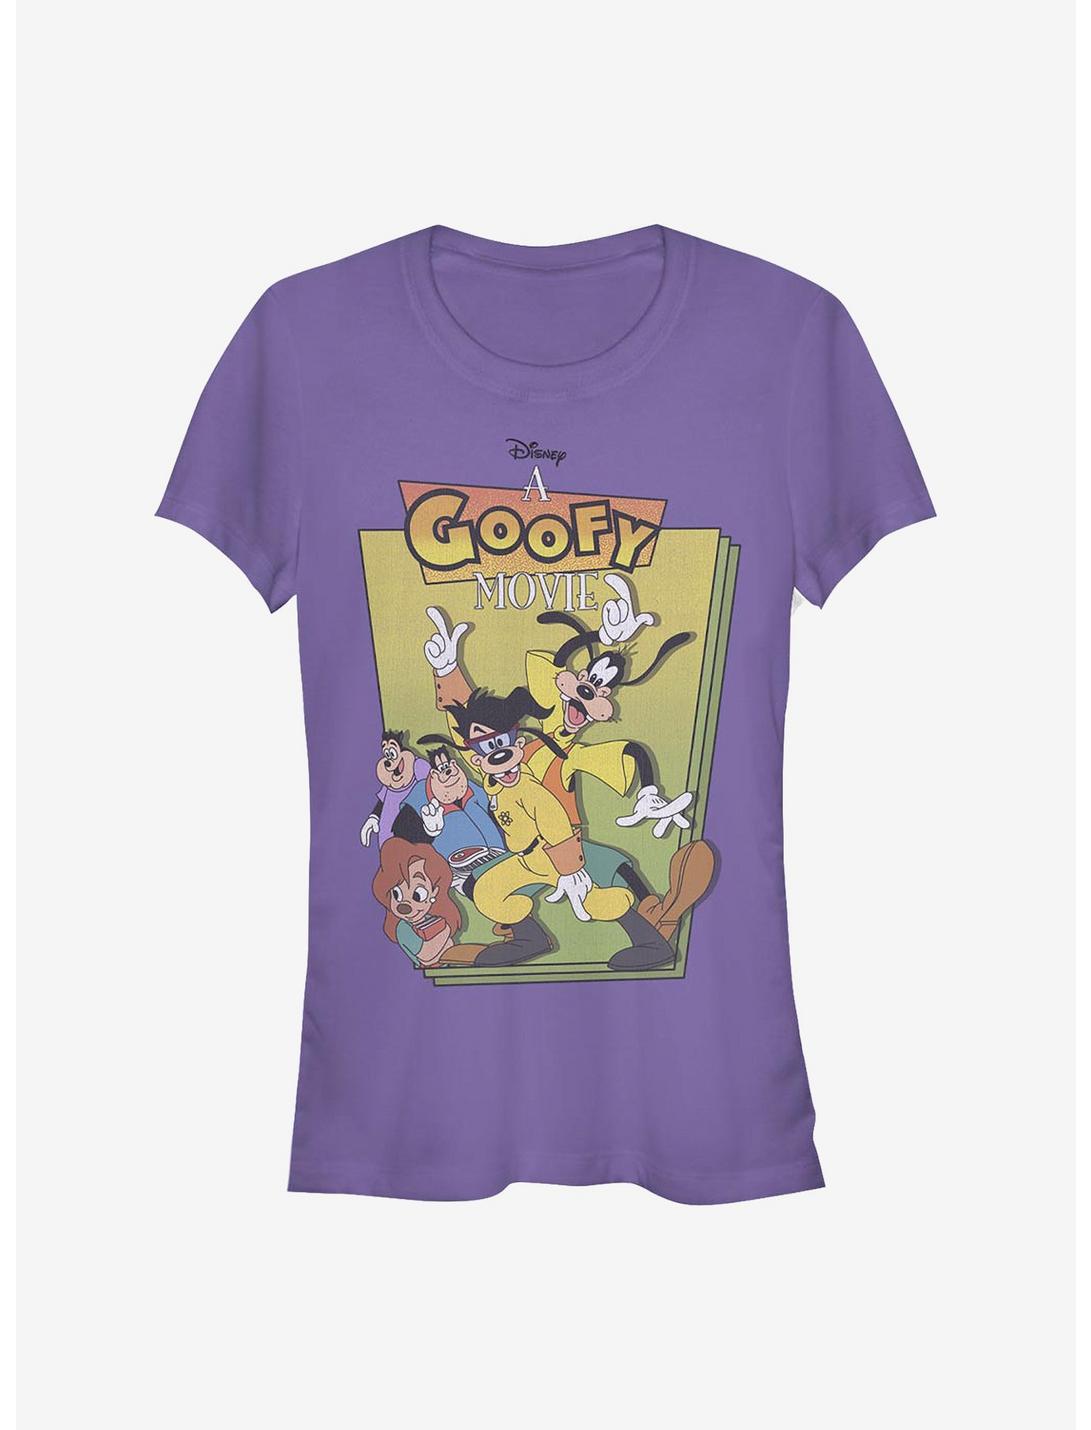 Disney A Goofy Movie Goof Cover Girls T-Shirt, PURPLE, hi-res